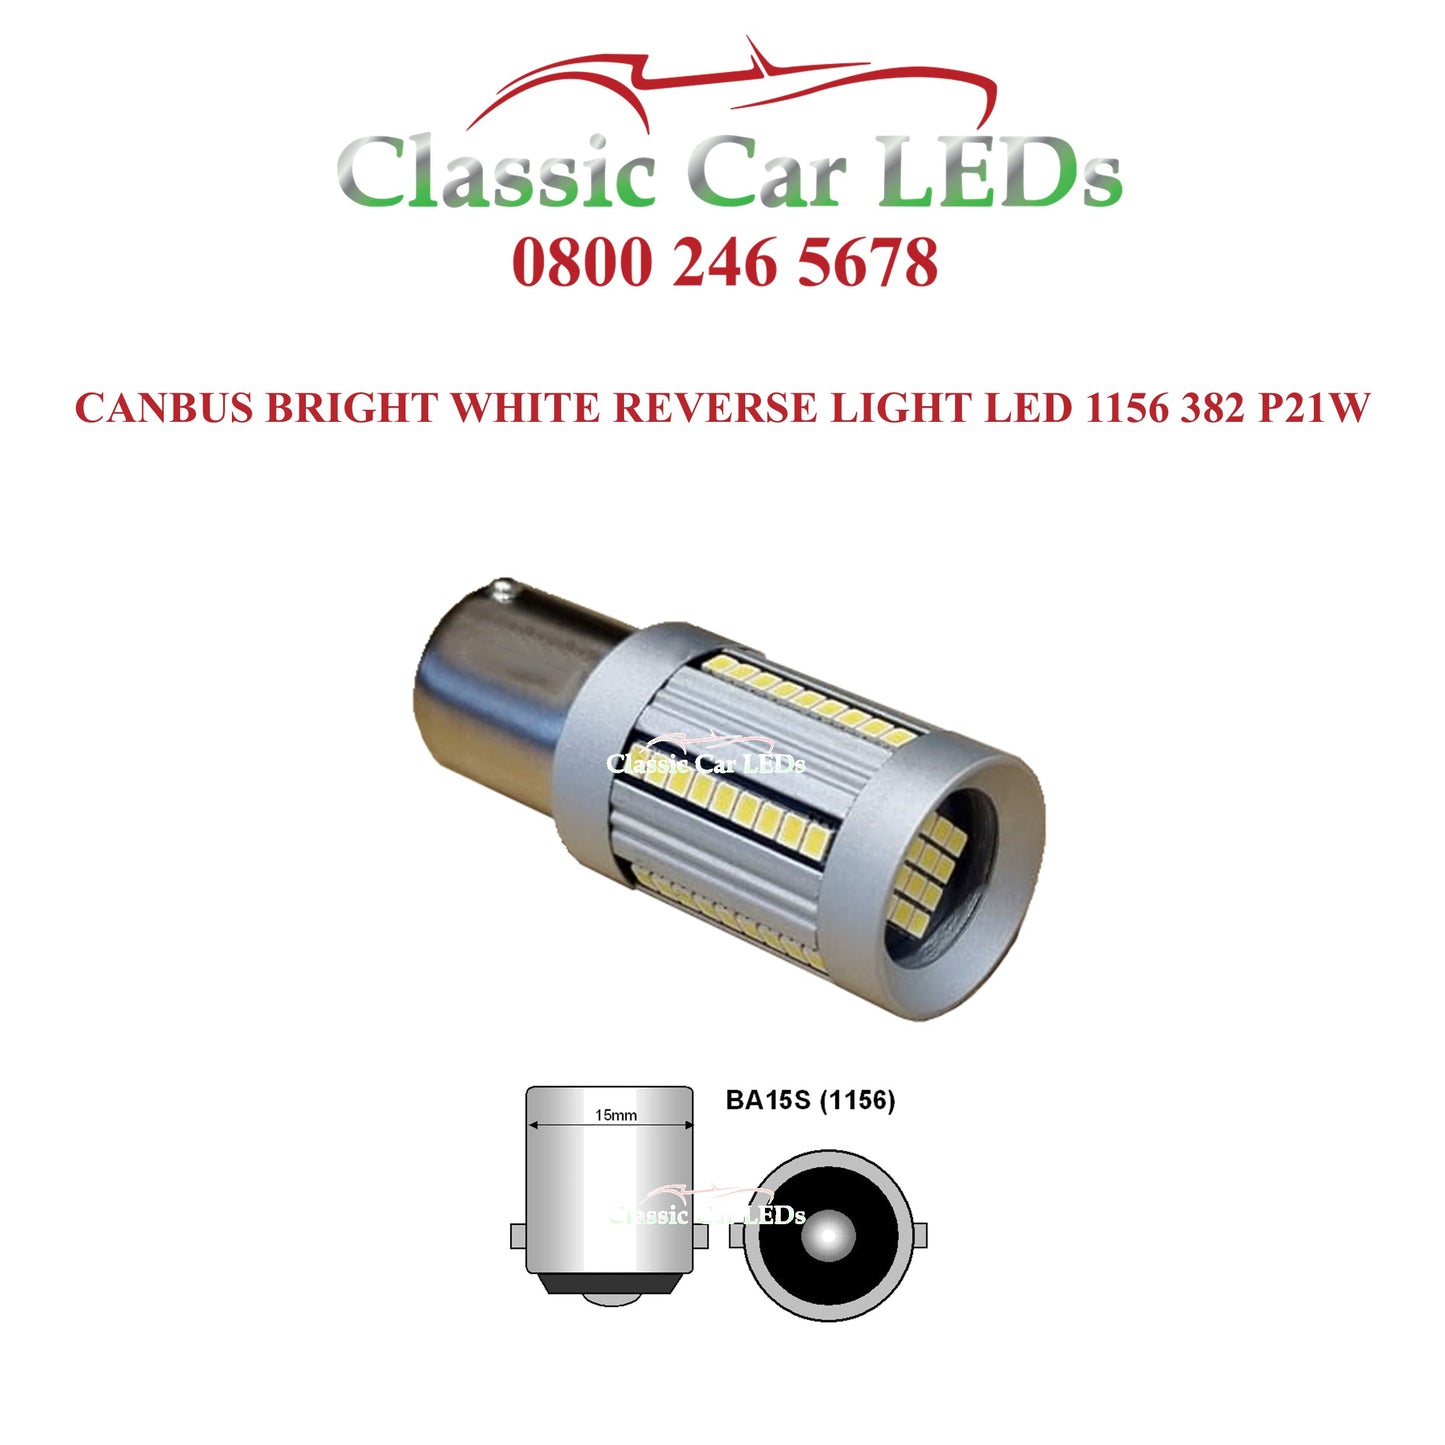 Strong Canbus Reverse Back Up Light White LED 1156 P21W 382 – Classic Car  LEDs Ltd